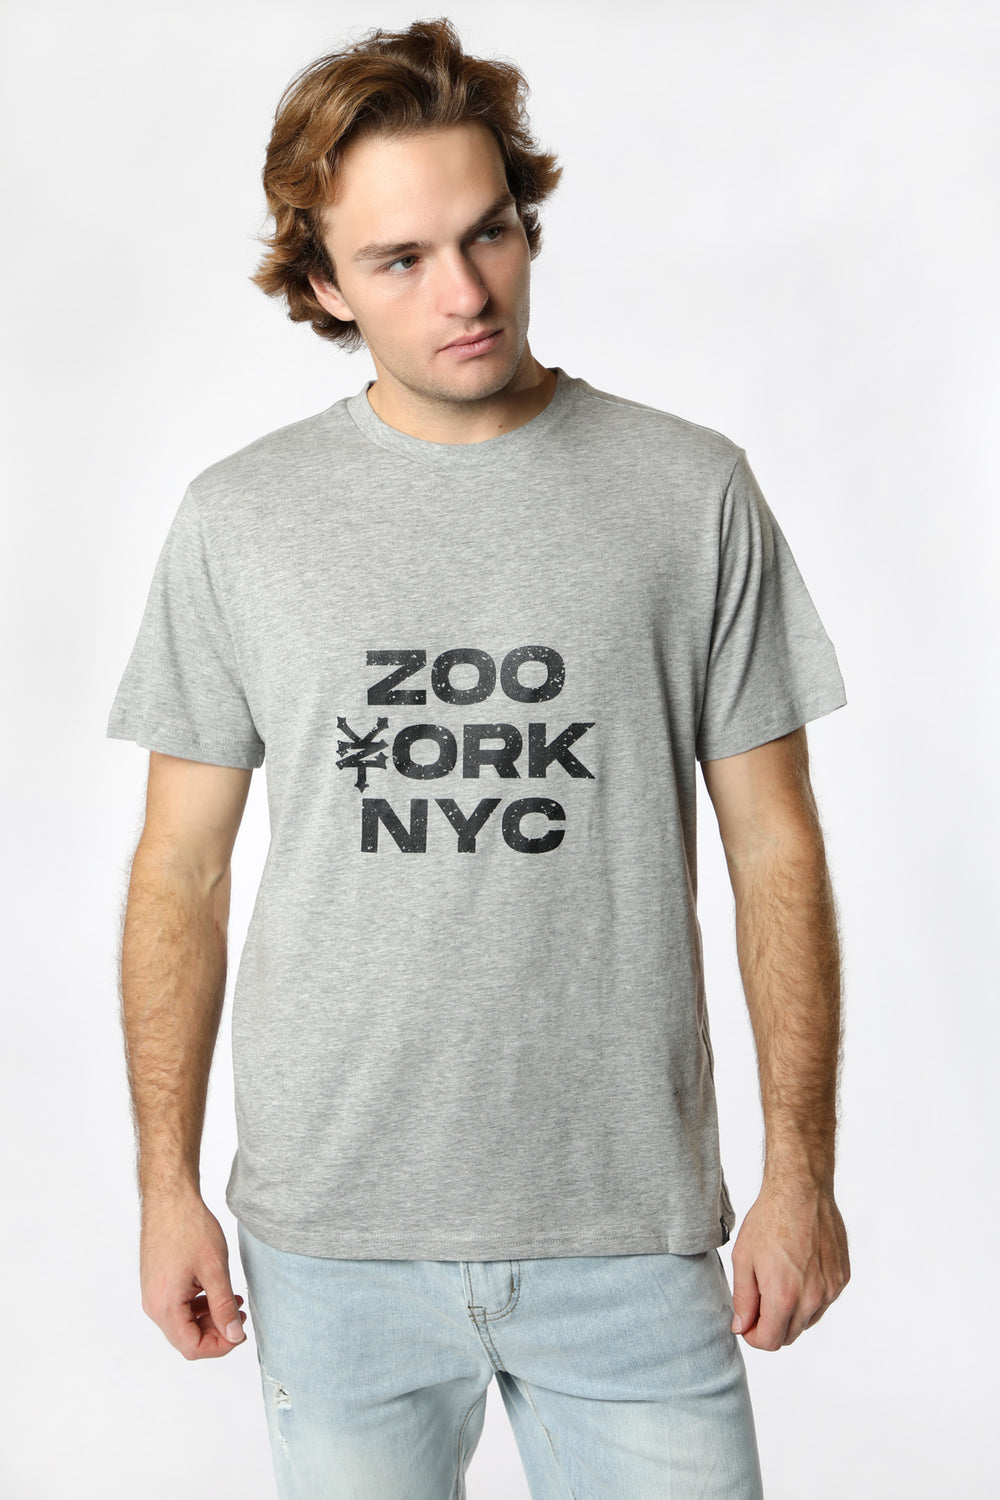 T-Shirt Imprimé Logo NYC Zoo York Homme T-Shirt Imprimé Logo NYC Zoo York Homme